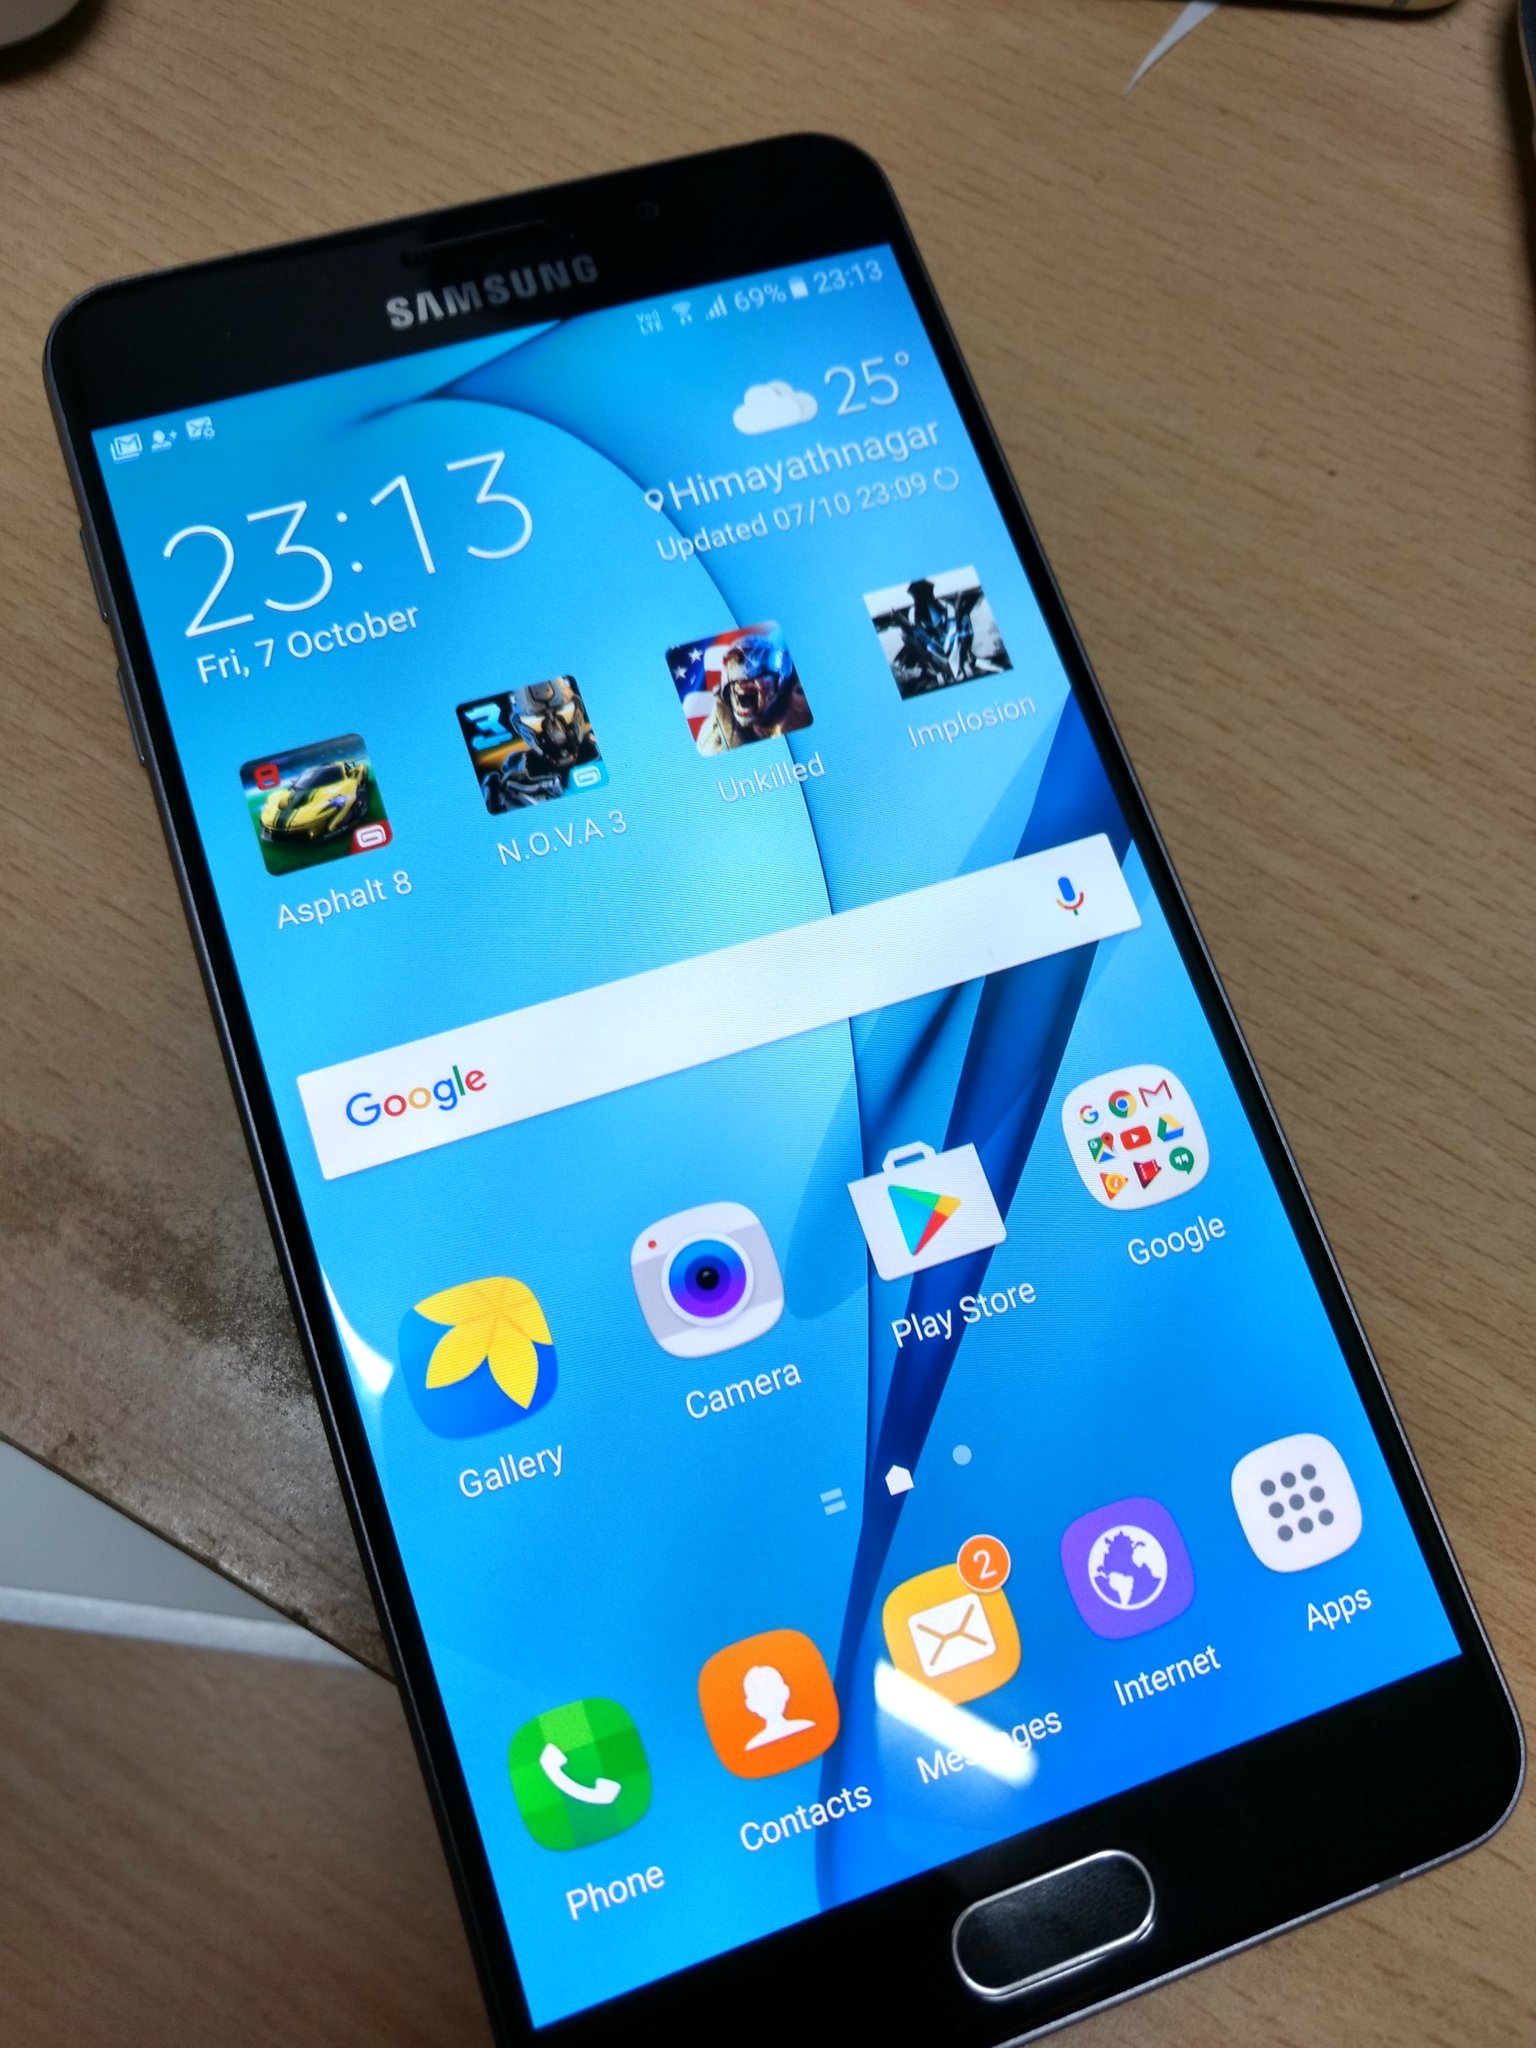 Samsung Galaxy A9 Pro review - GadgetMatch